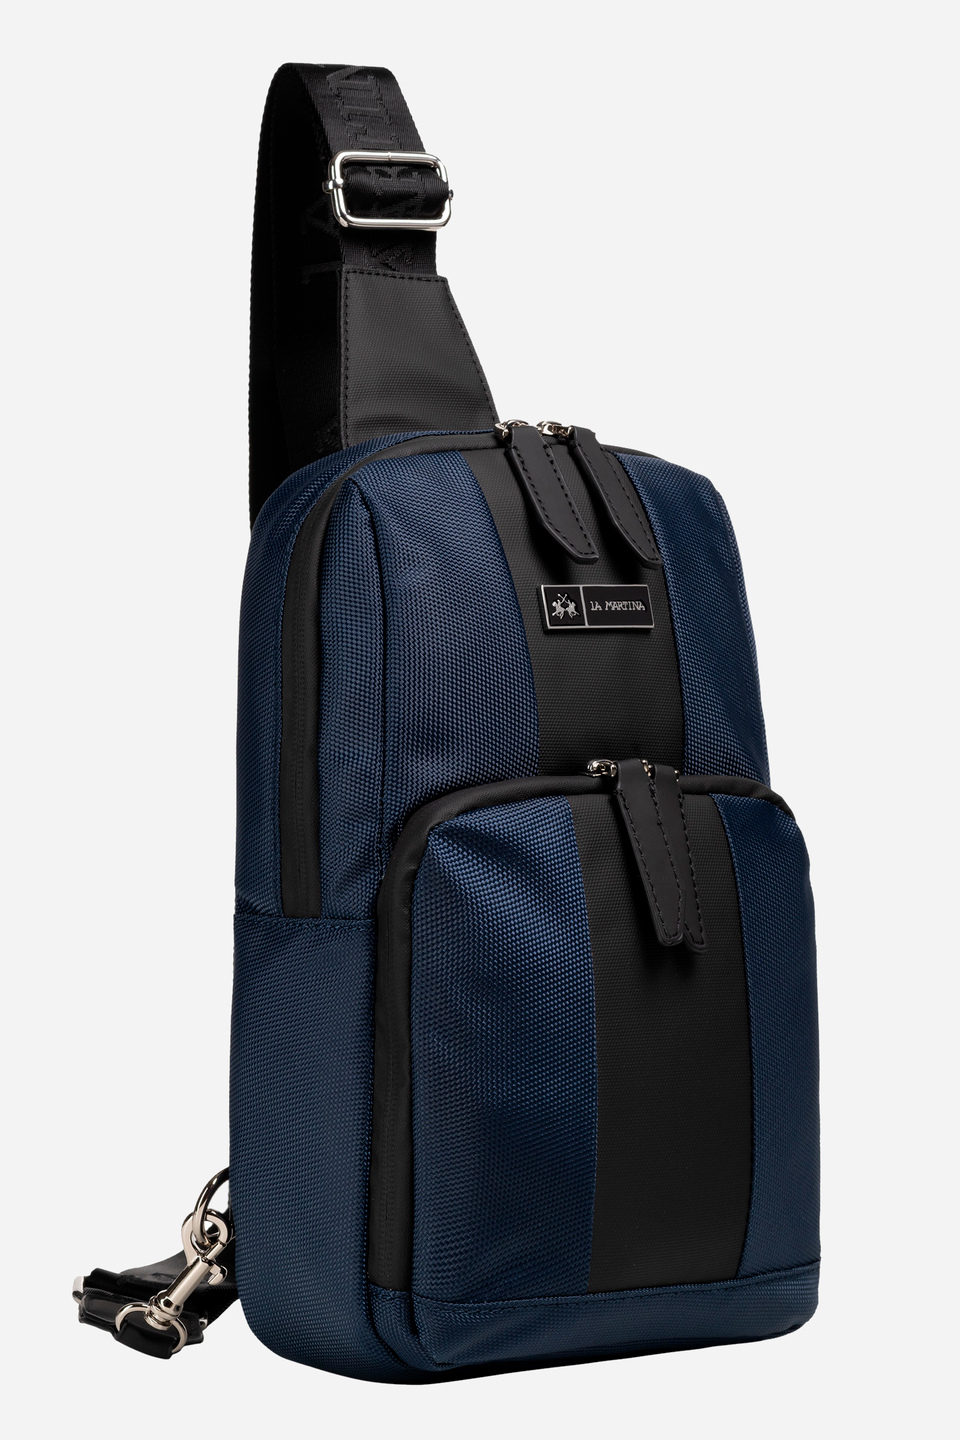 Polyester sling bag with a polyester webbing strap | La Martina - Official Online Shop